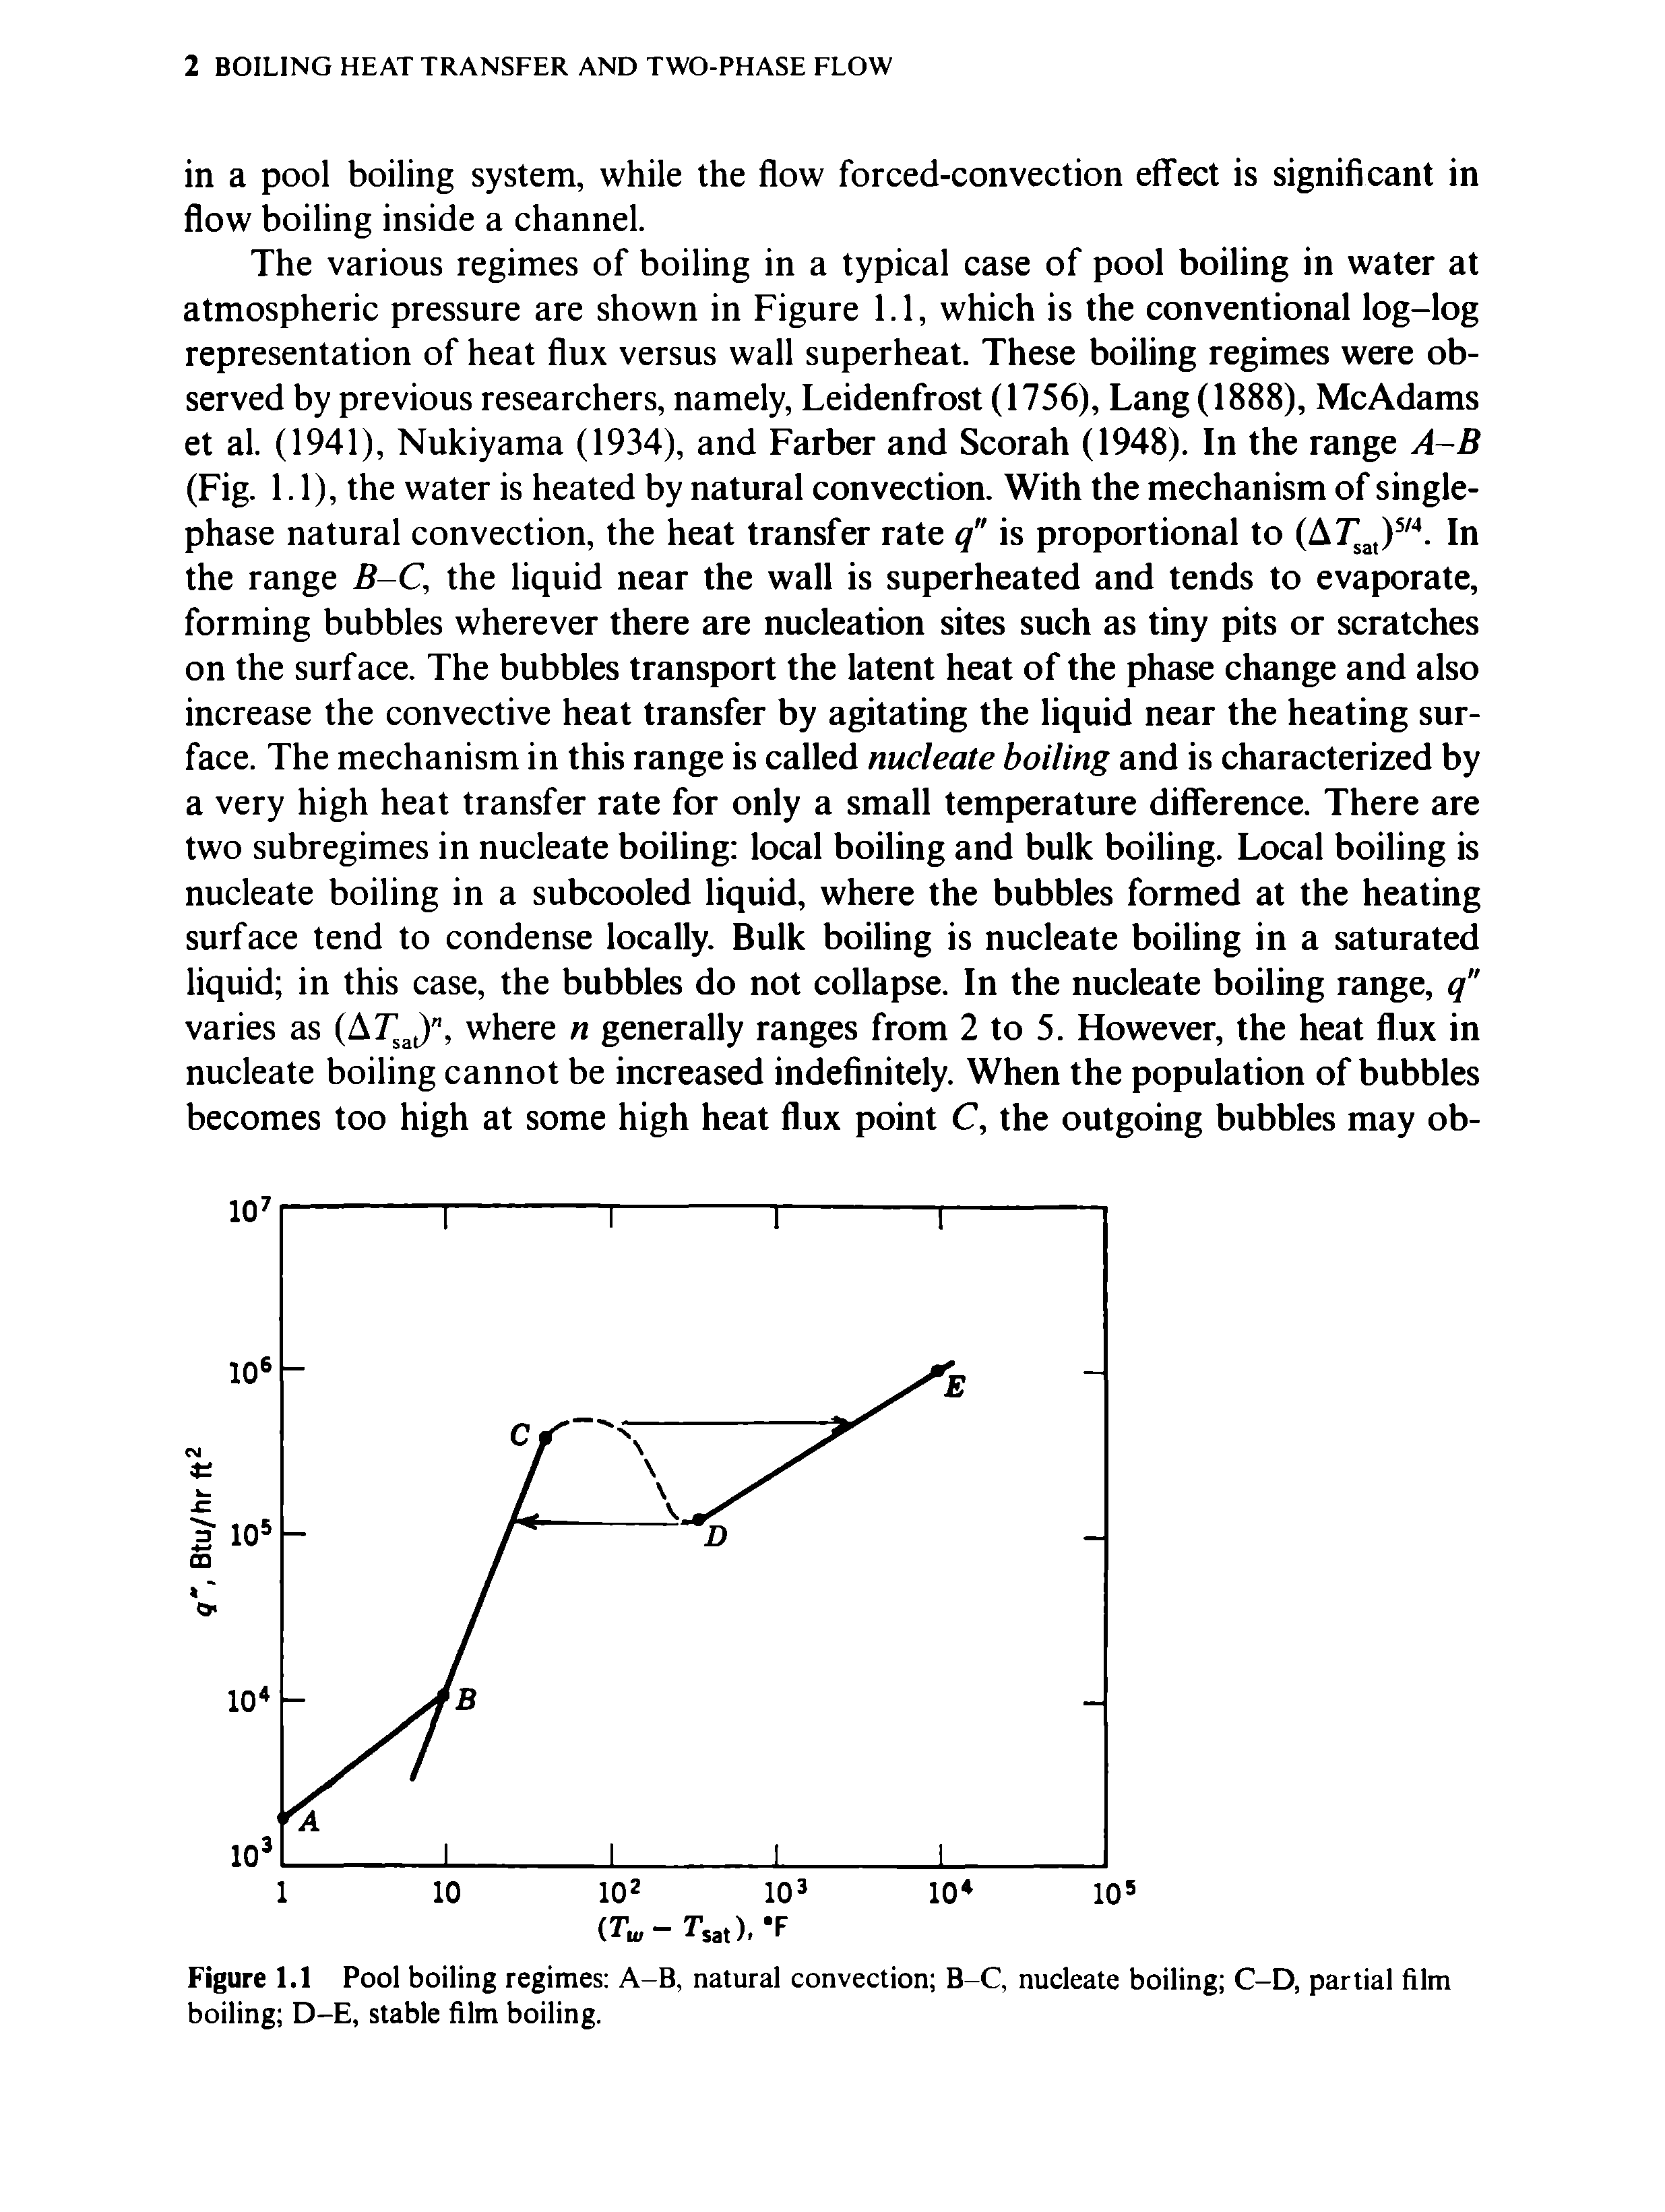 Figure 1.1 Pool boiling regimes A-B, natural convection B-C, nucleate boiling C-D, partial film boiling D-E, stable film boiling.